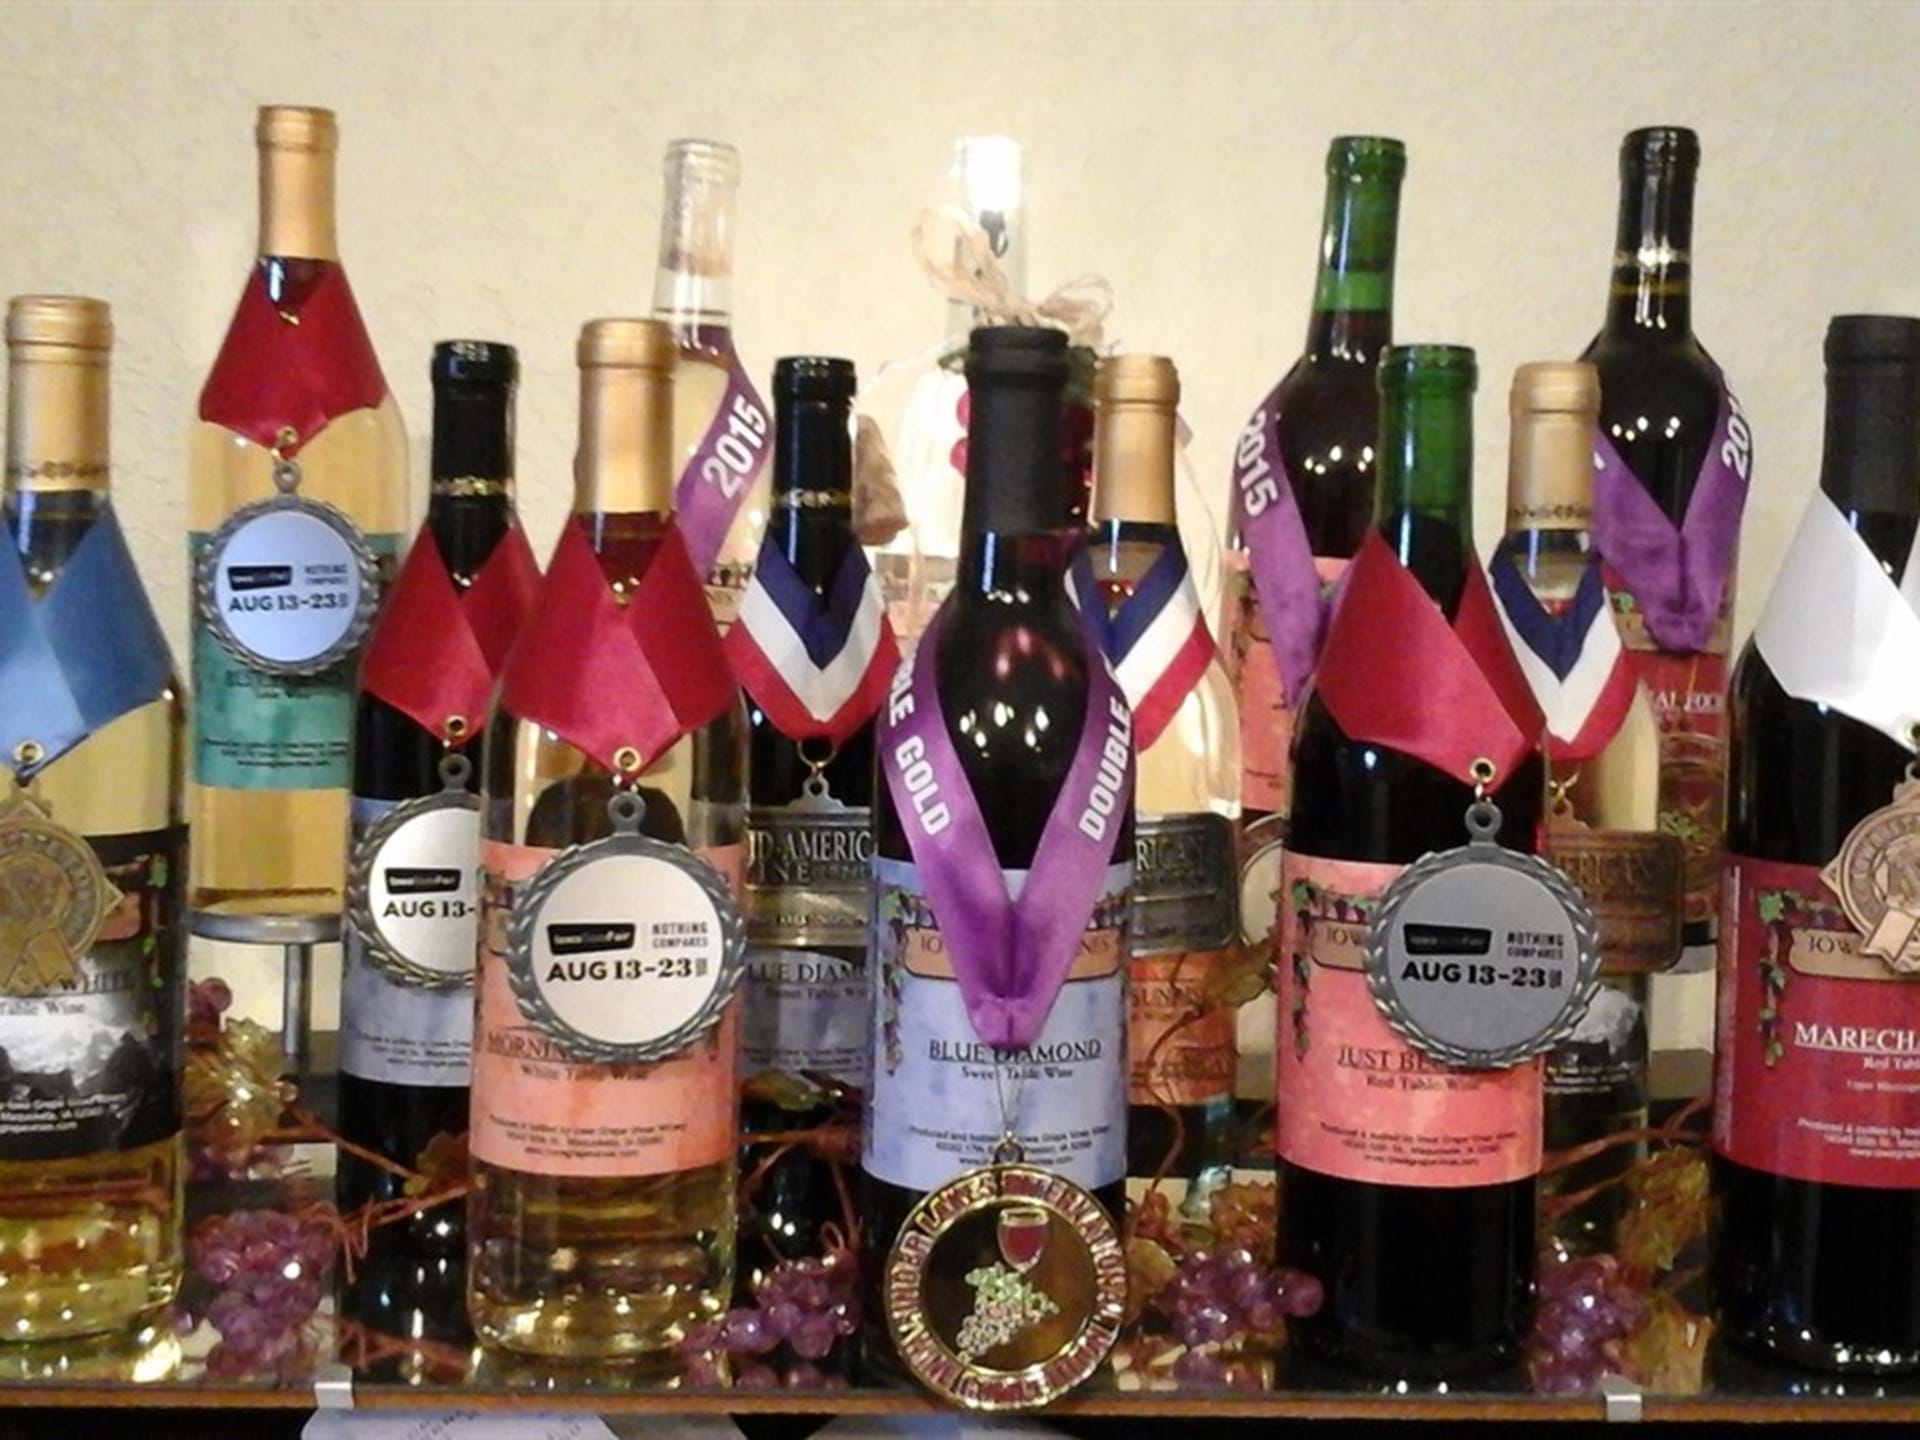 International Award-winning wines